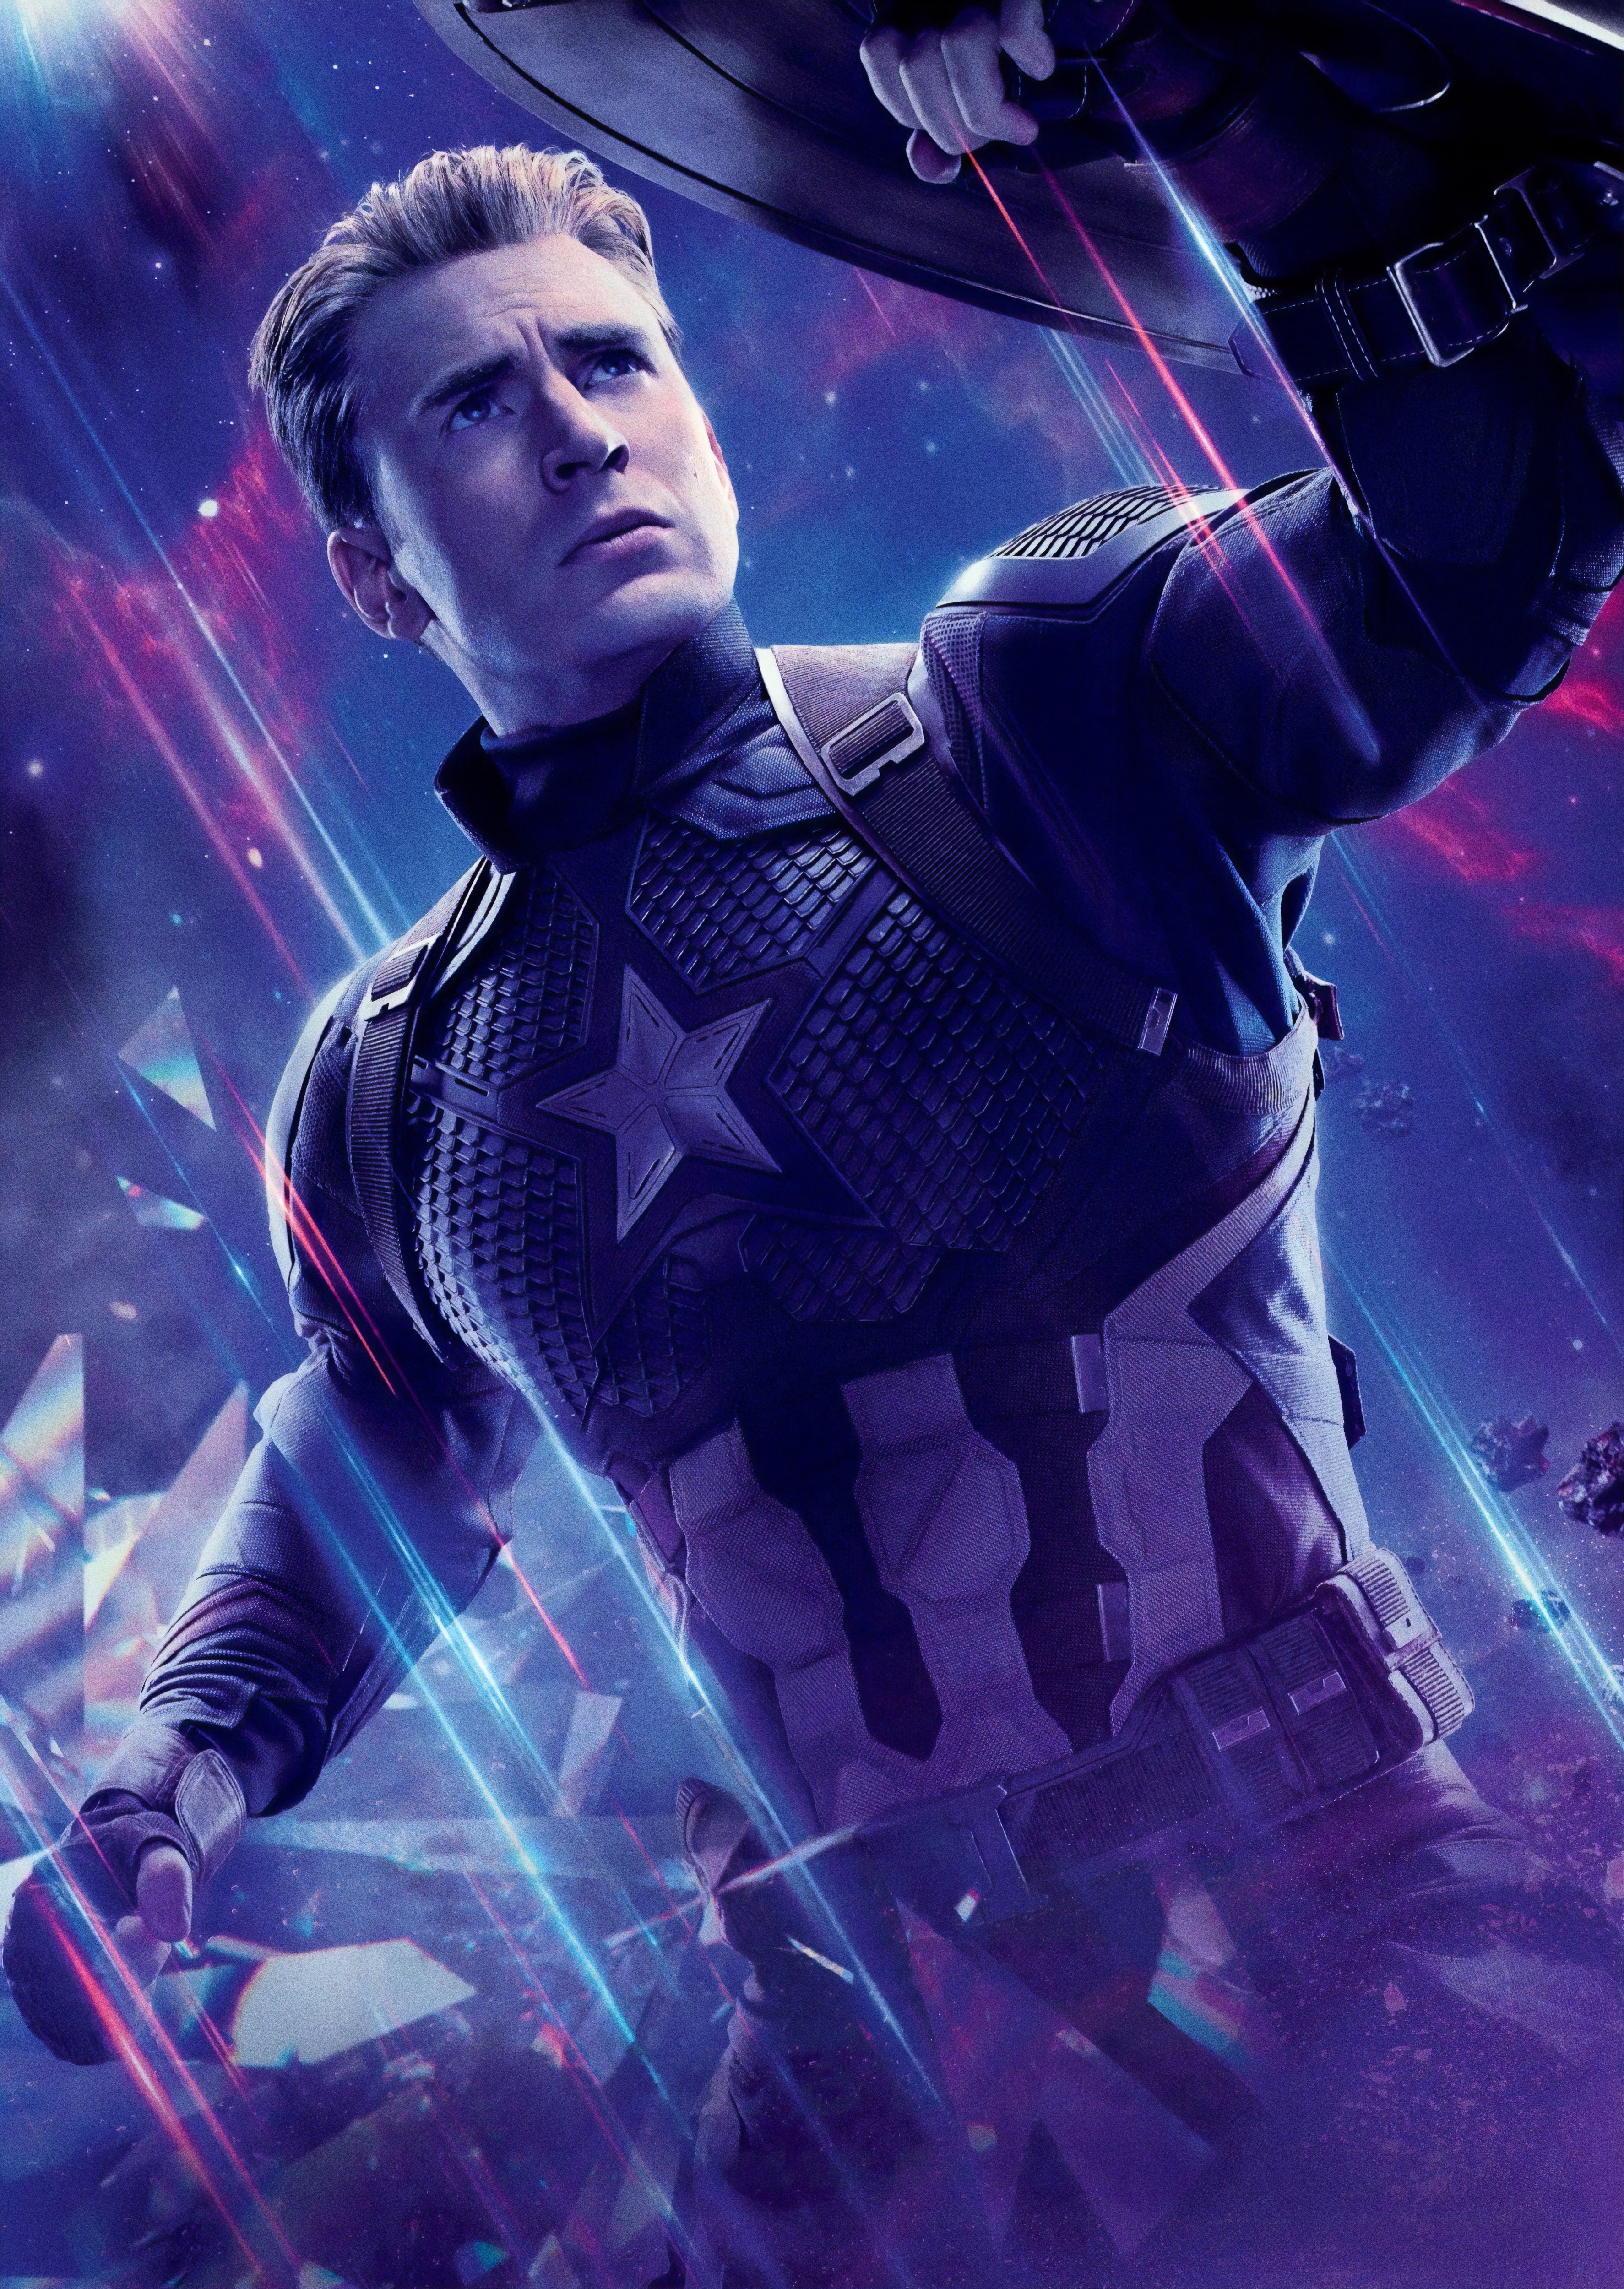 Captain Marvel (film) - Wikipedia